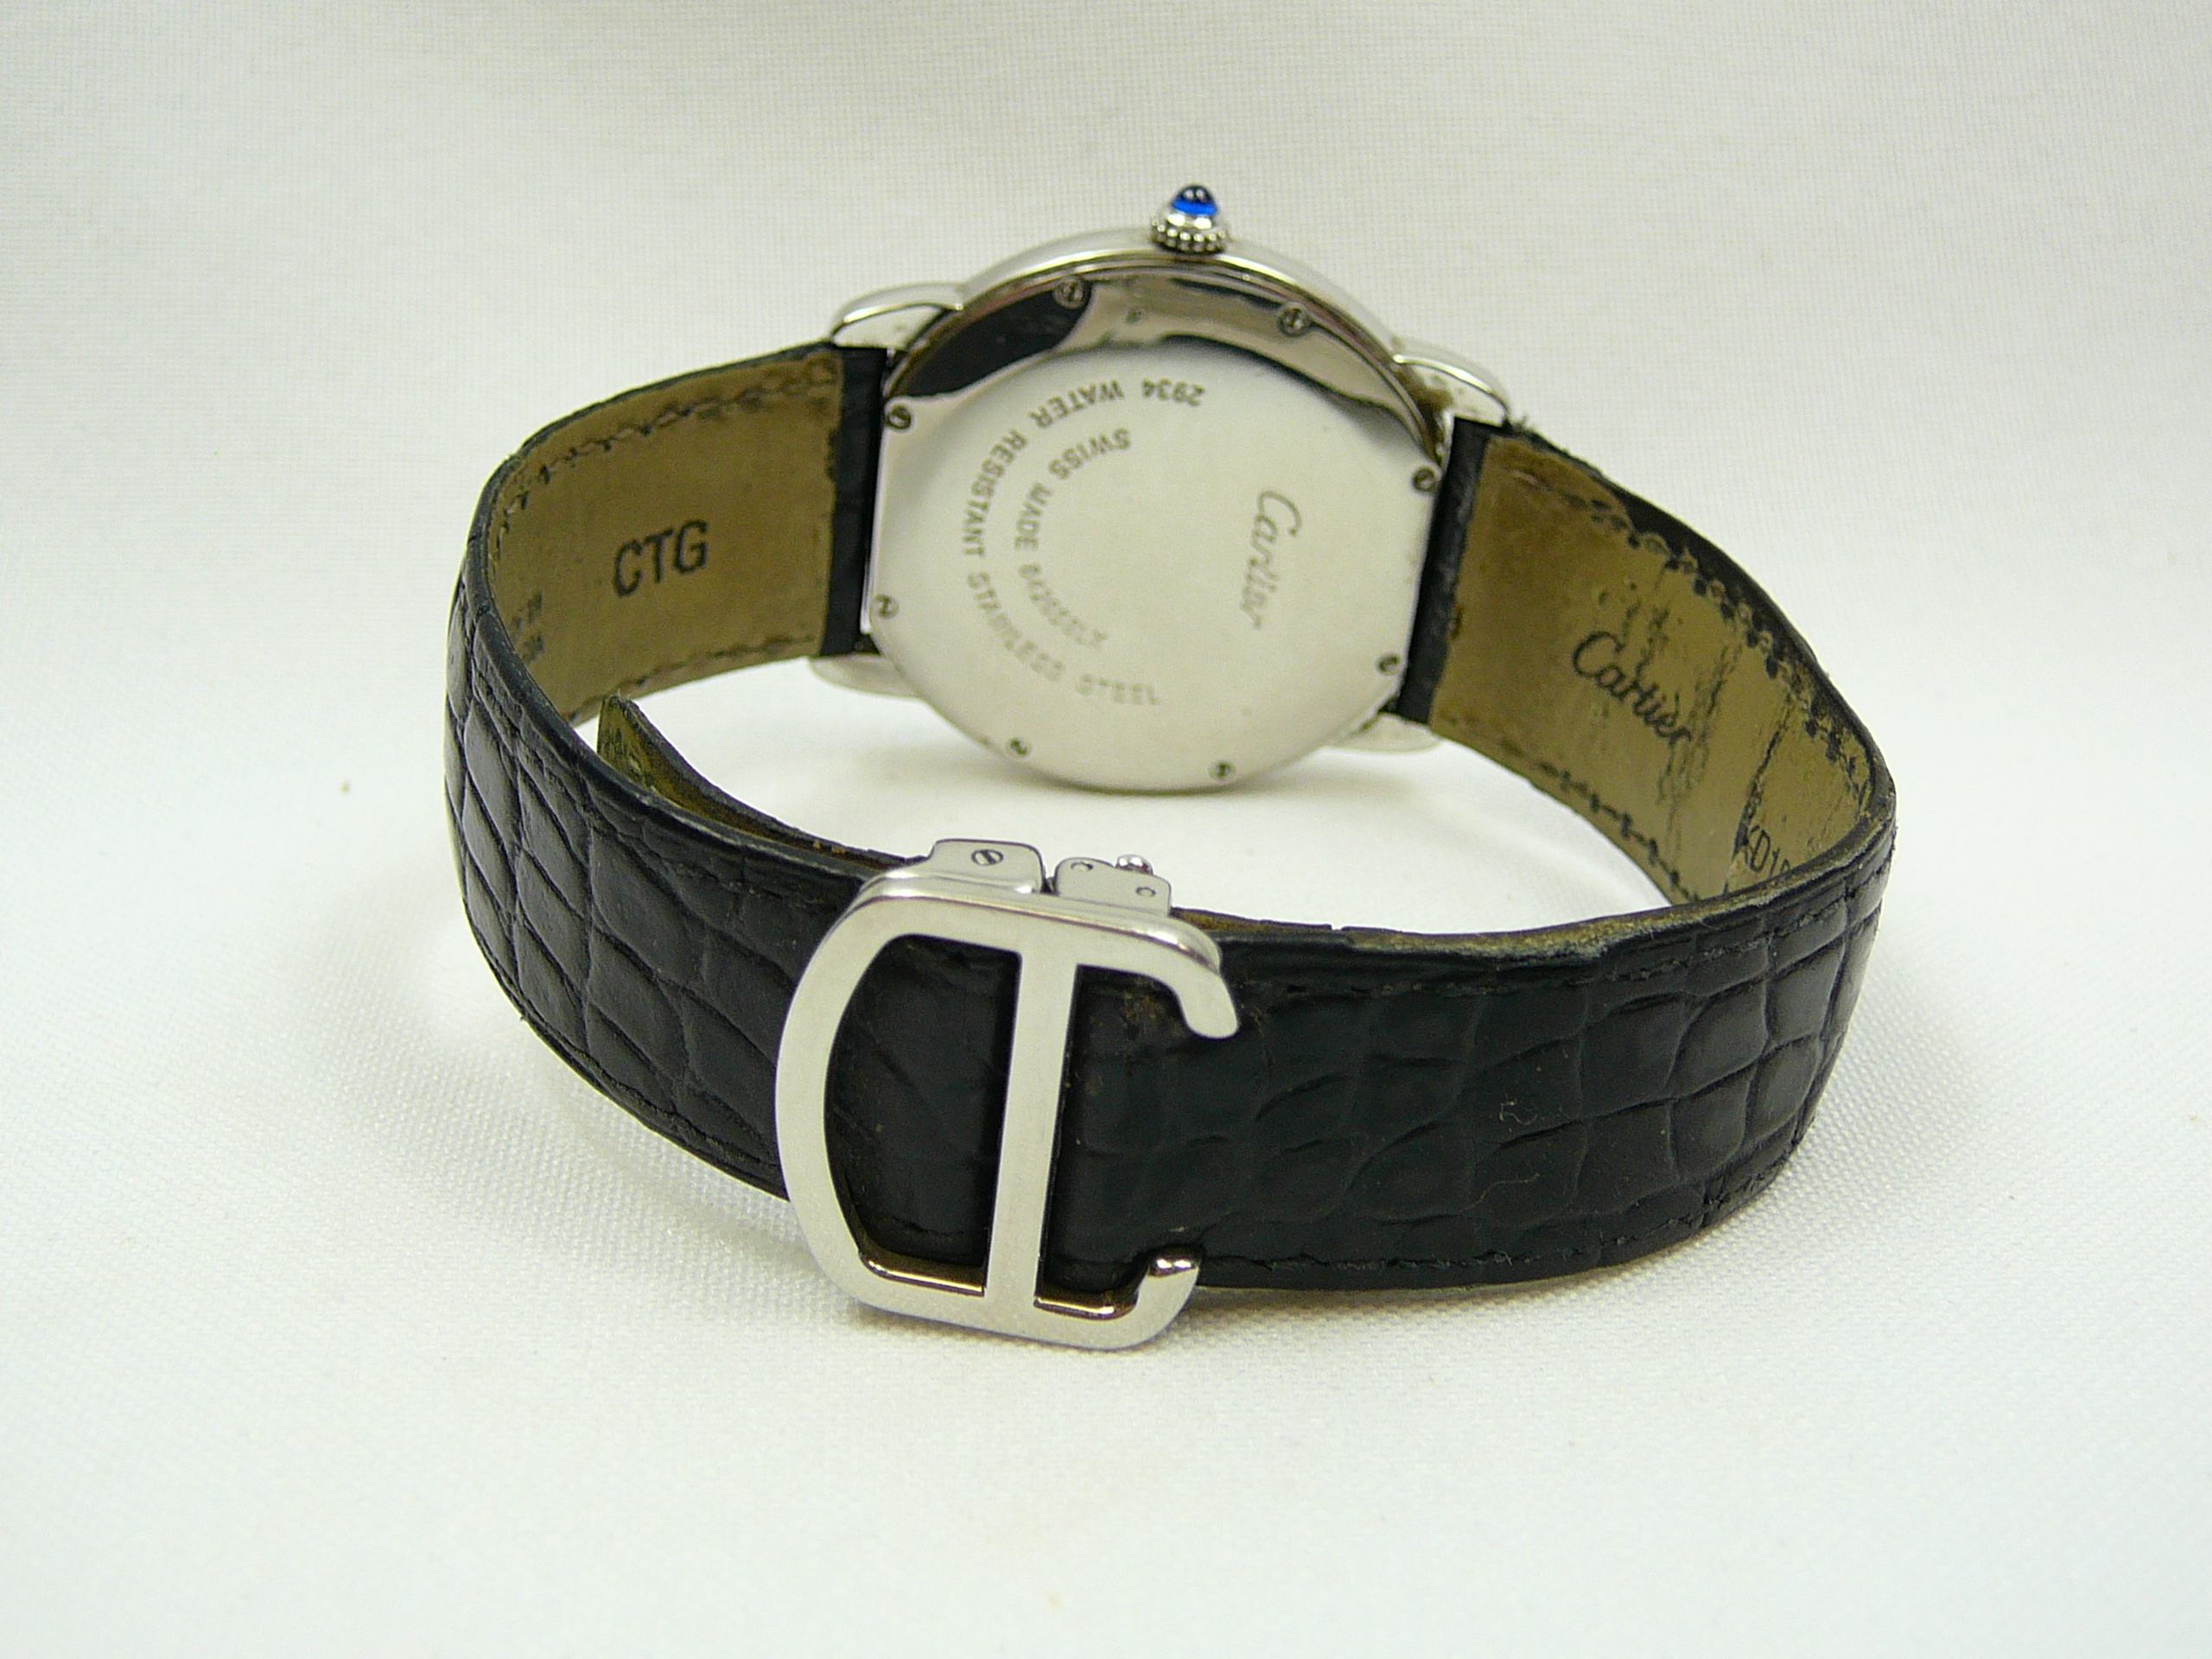 Gents Cartier Wristwatch - Image 3 of 3